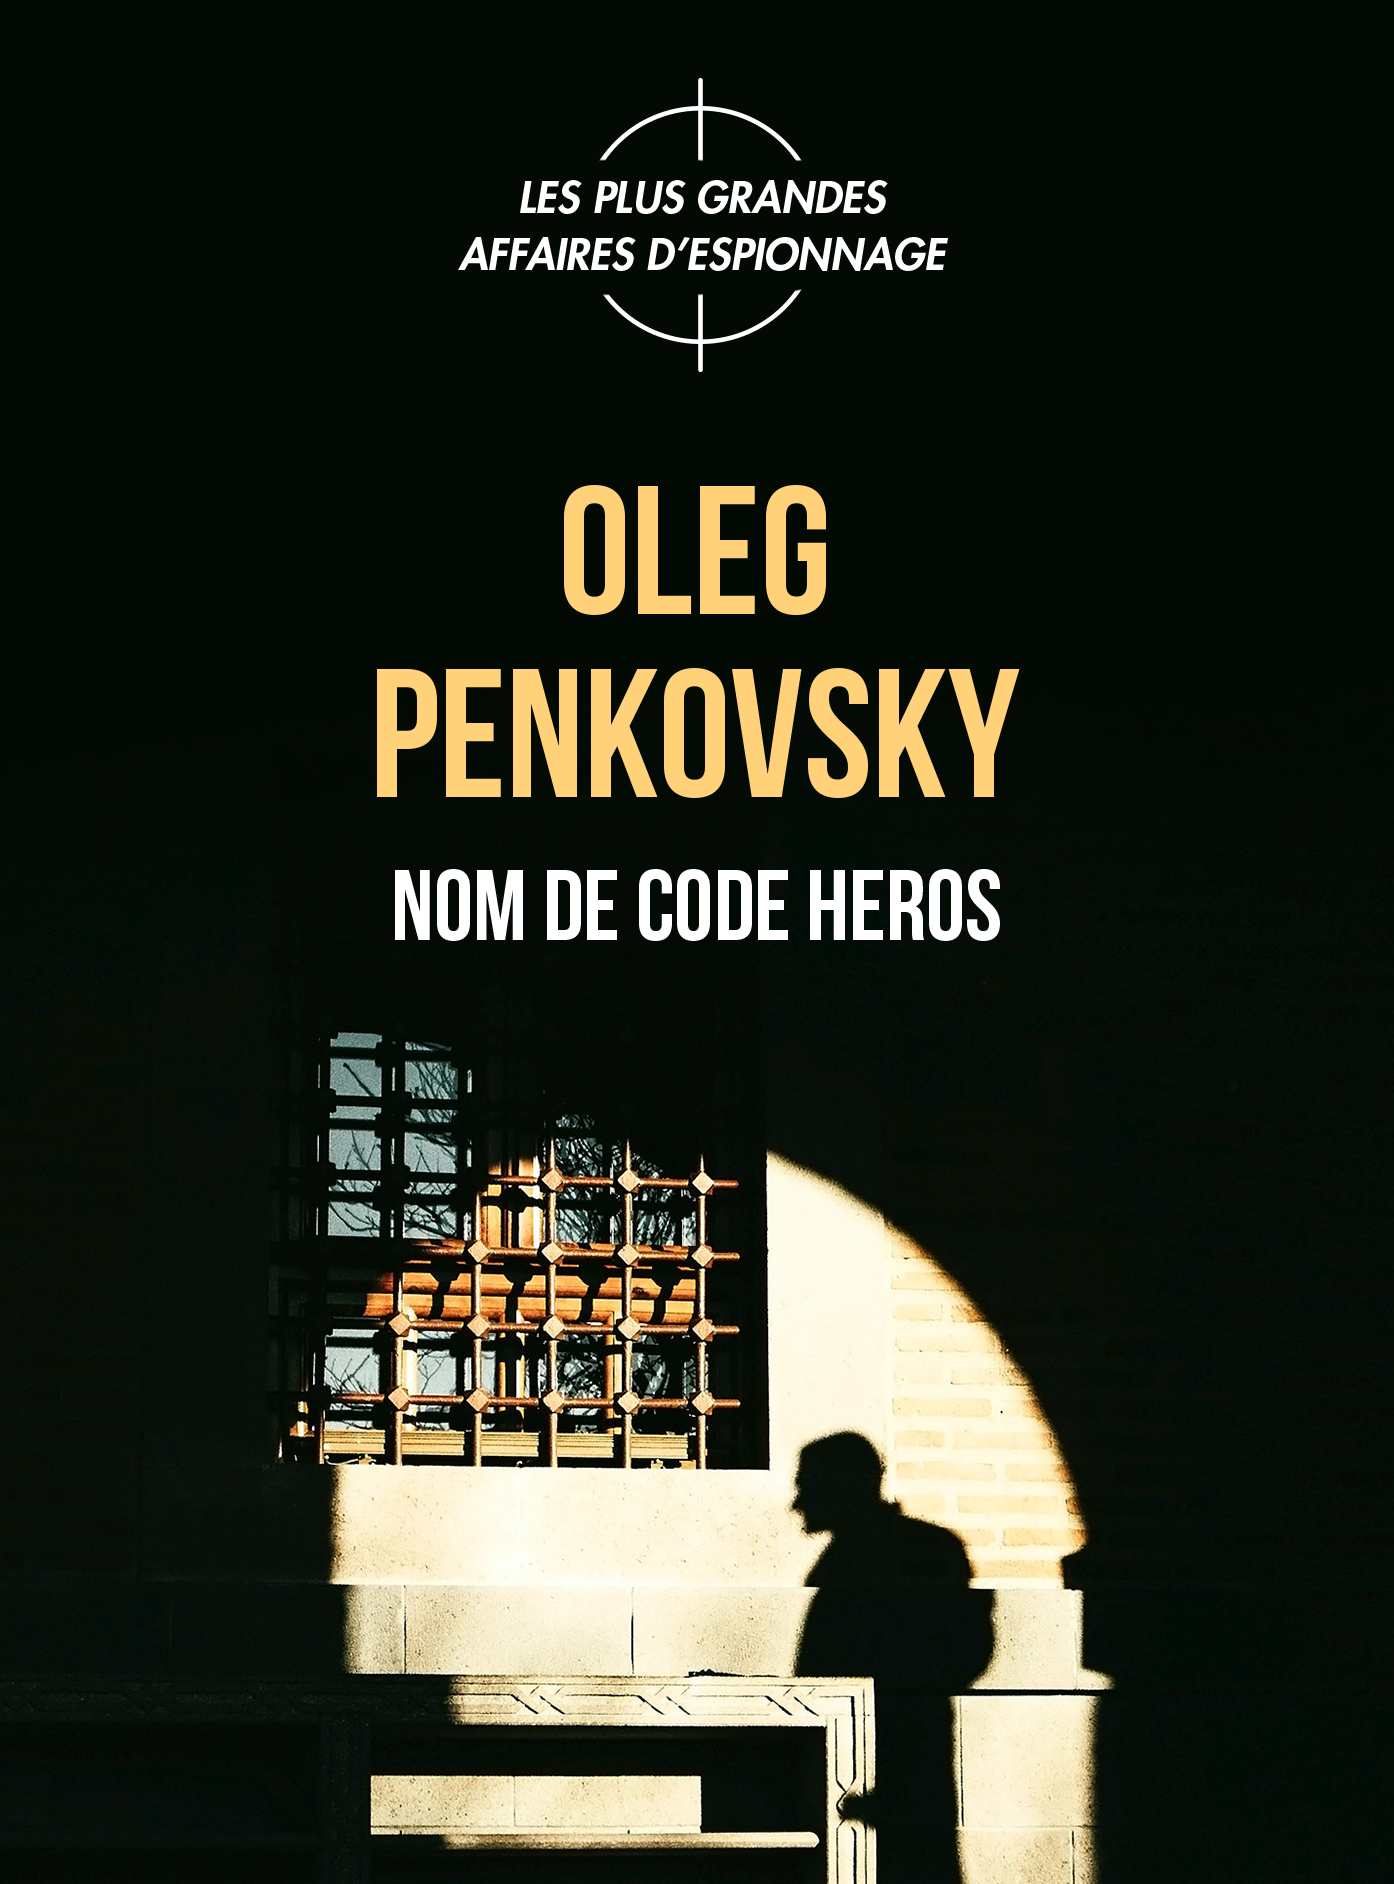 Oleg Penkovsky, nom de code HEROS